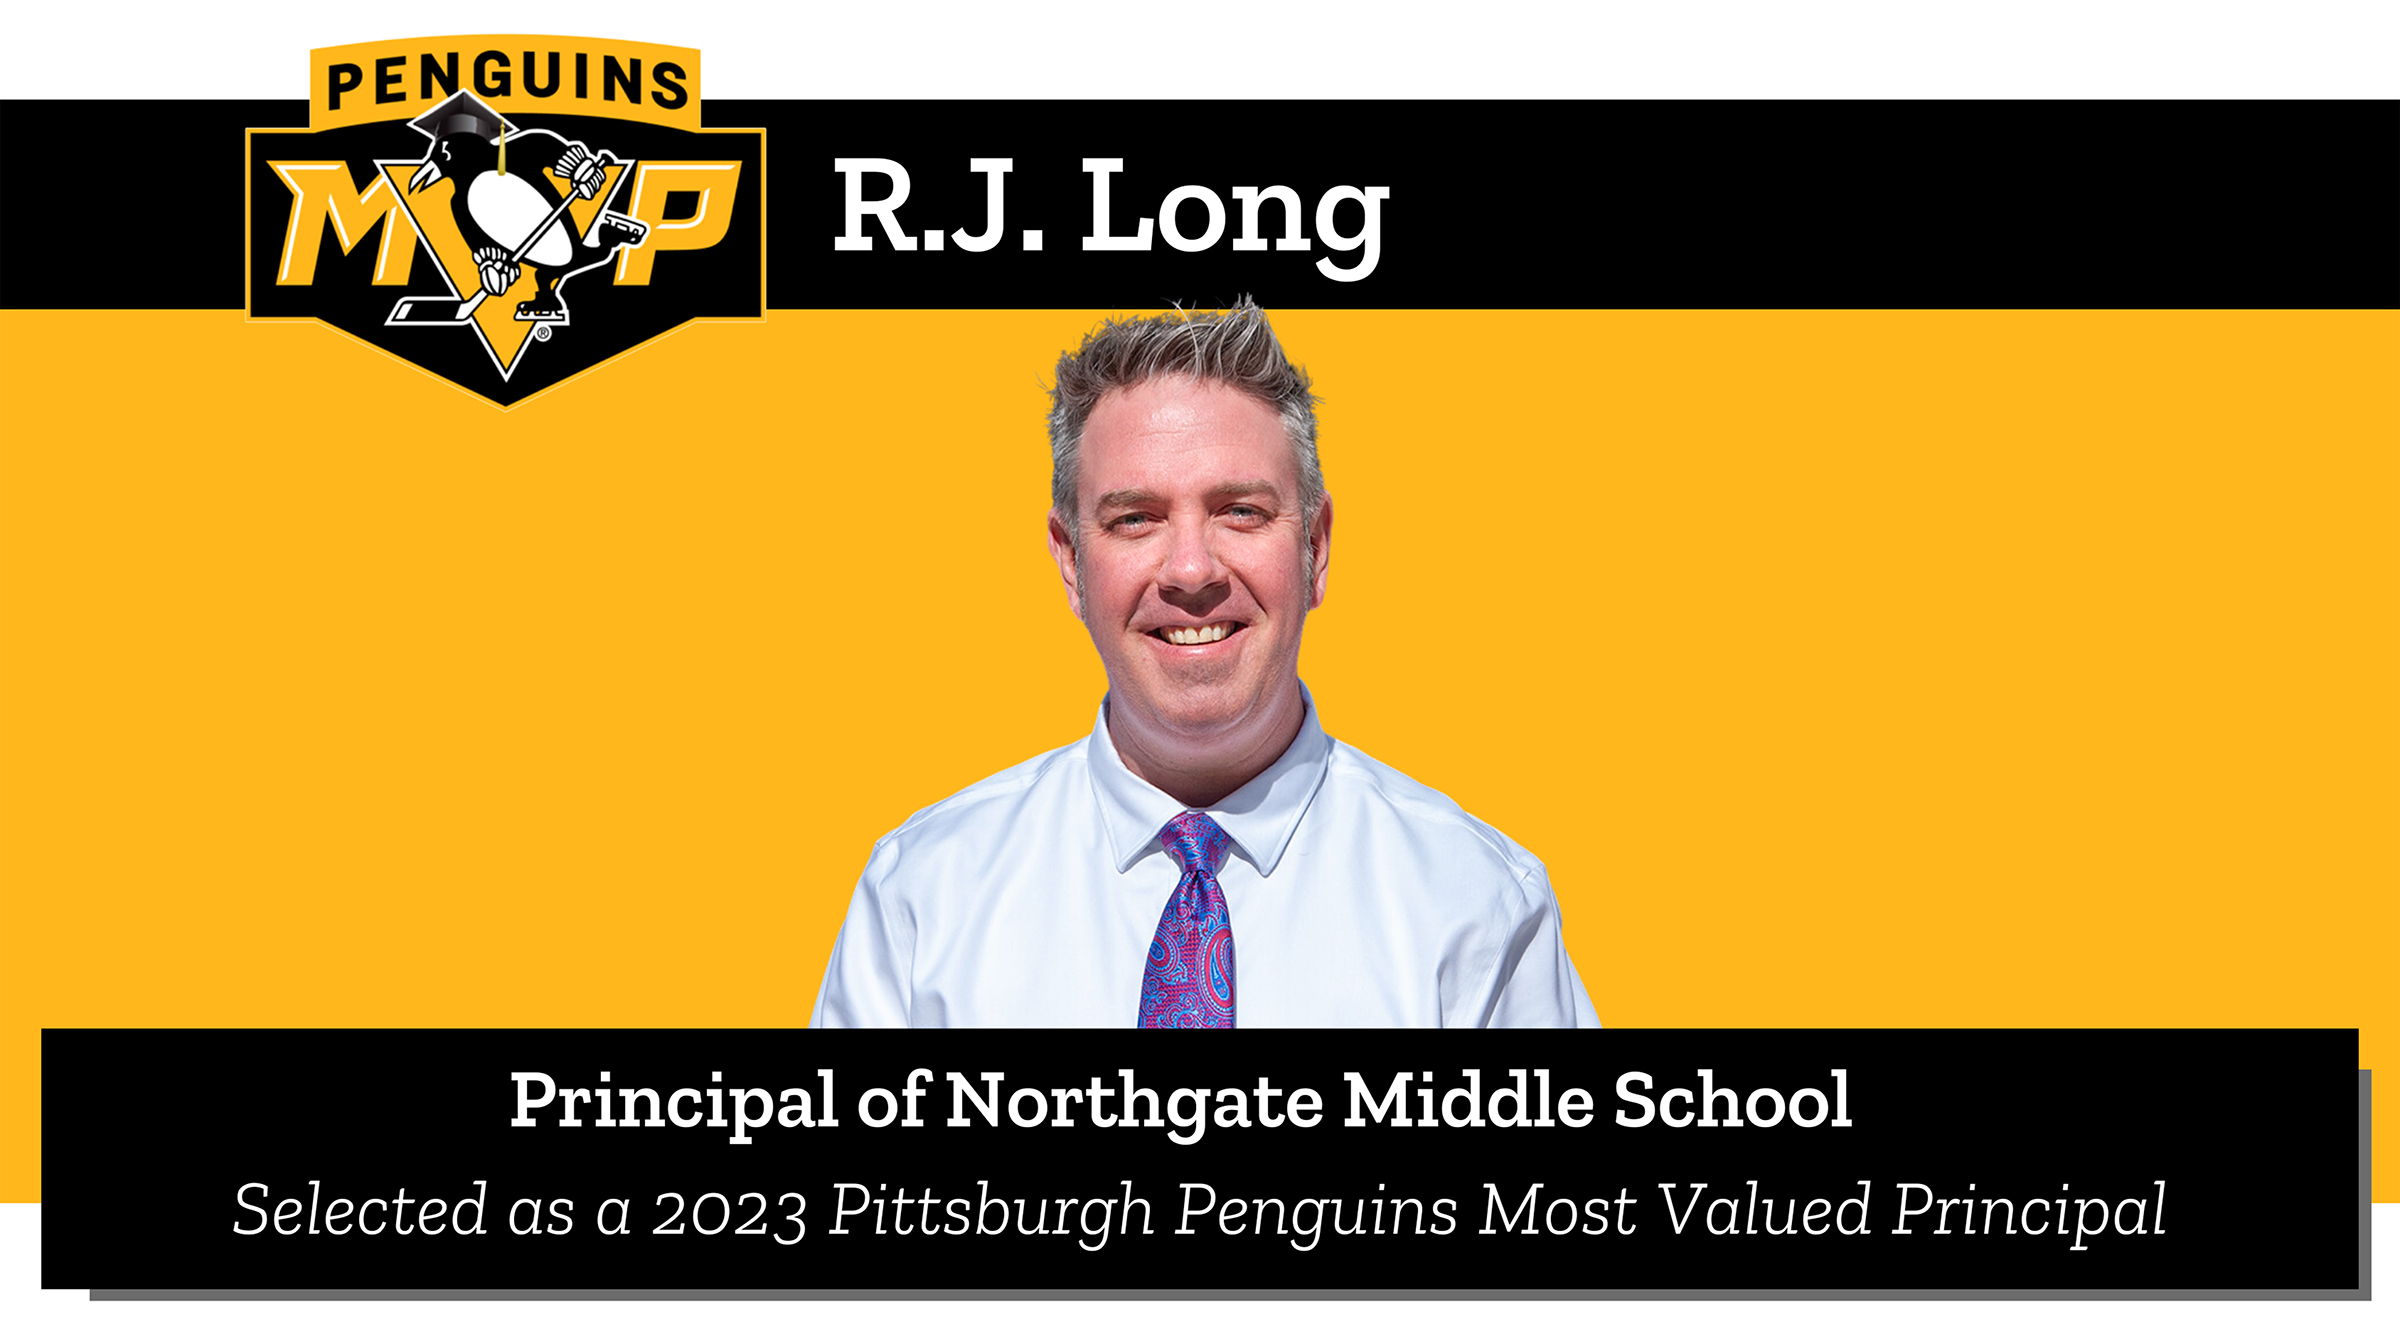 Pens MVP R.J. Long, Principal of Northgate Middle School